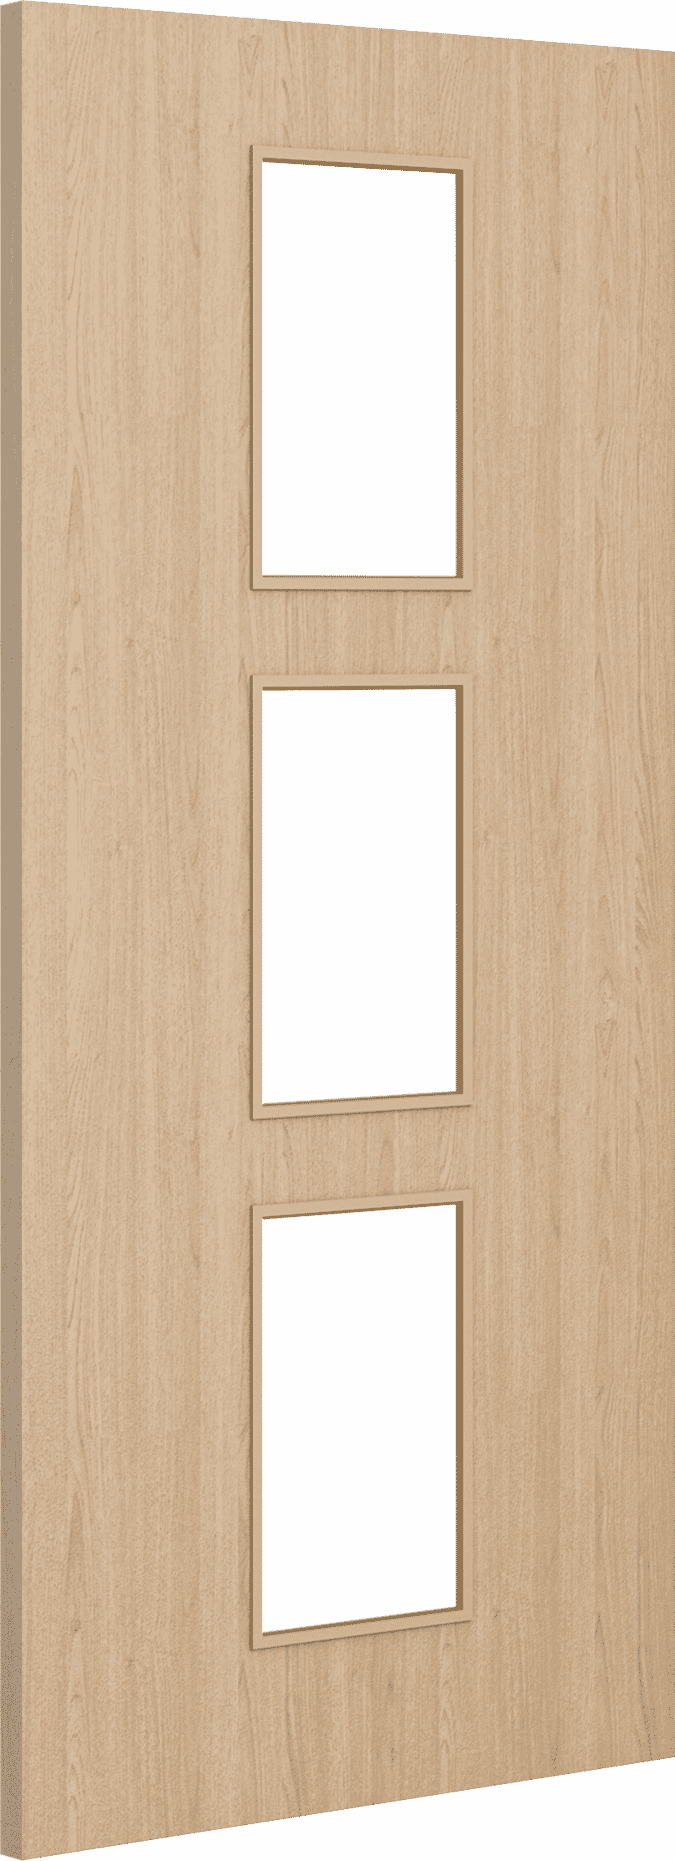 2032mm x 813mm x 44mm (32") Architectural Oak 11 Frosted Glazed - Prefinished FD30 Fire Door Blank